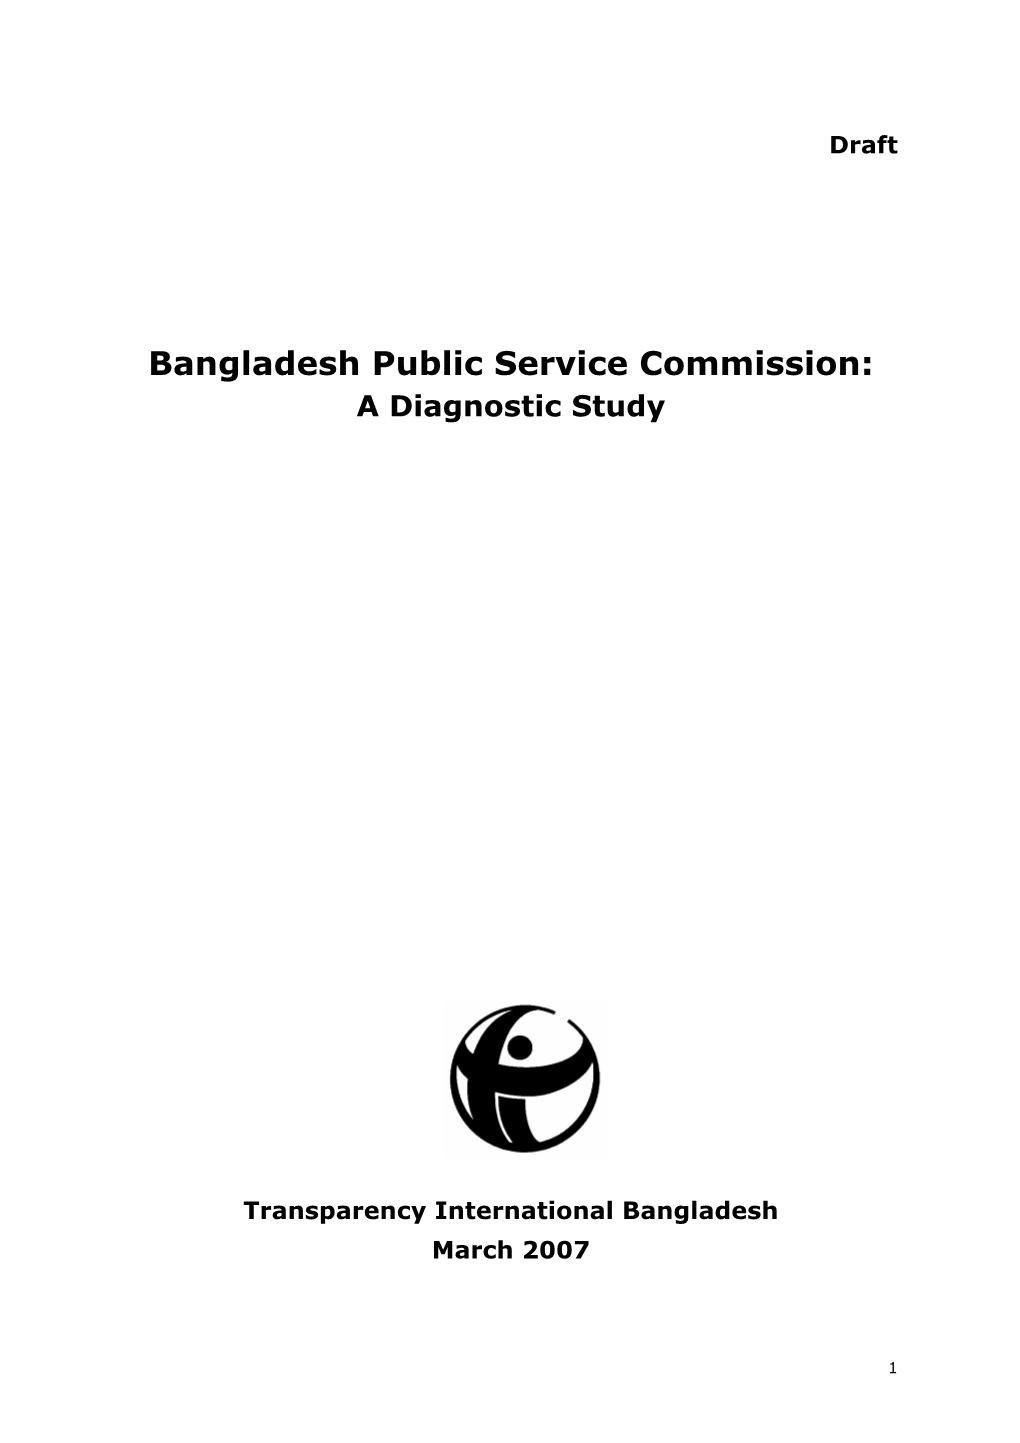 Bangladesh Public Service Commission: a Diagnostic Study